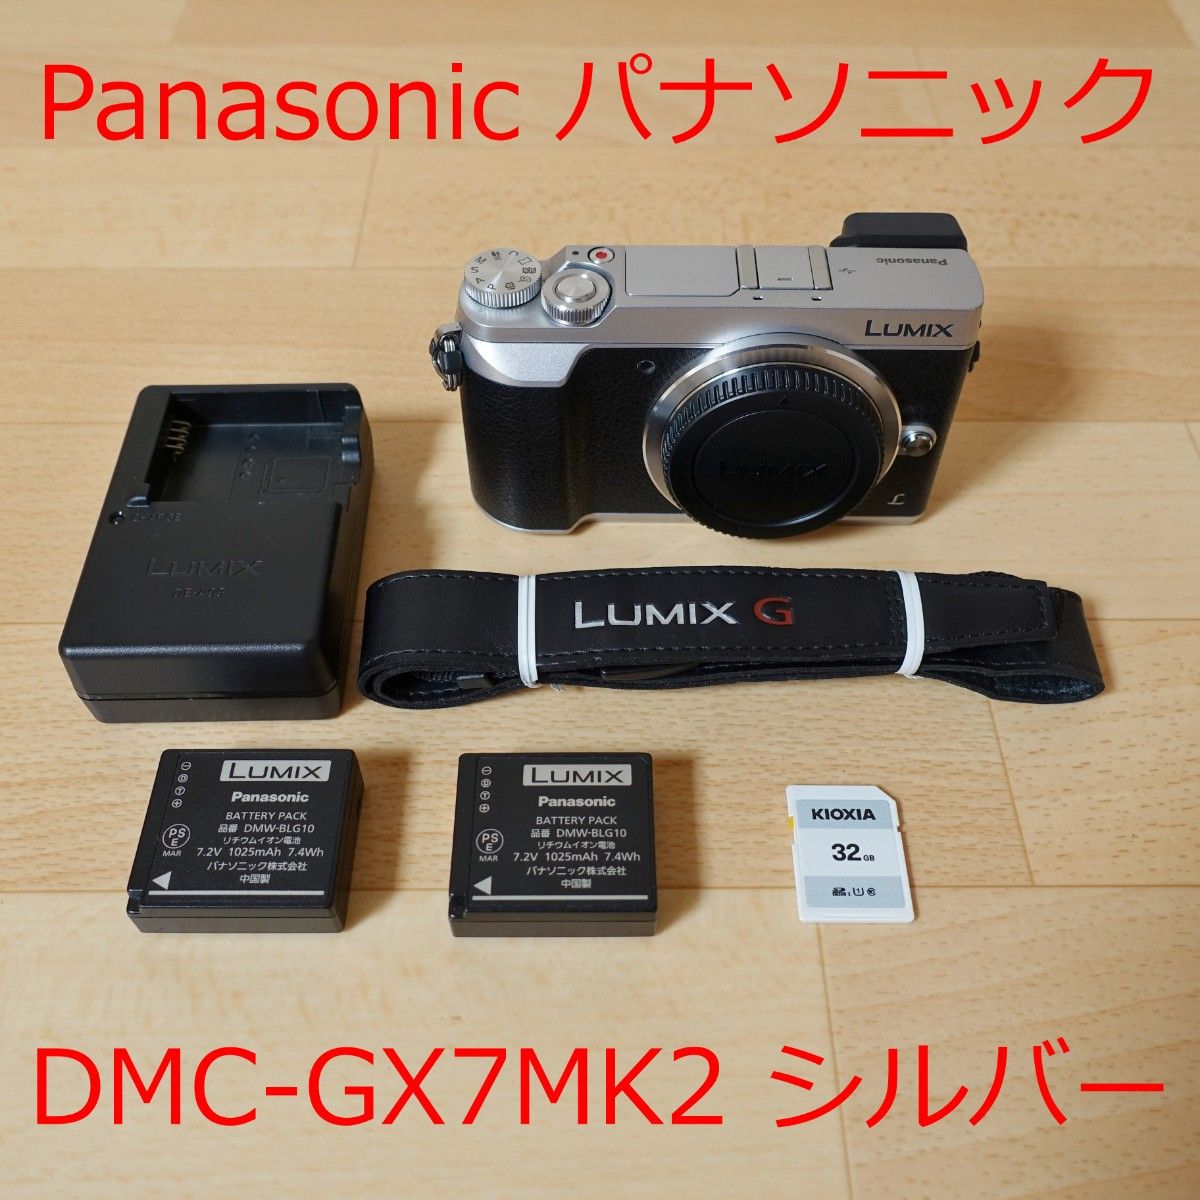 Panasonic パナソニック DMC-GX7MK2 シルバー ボディ